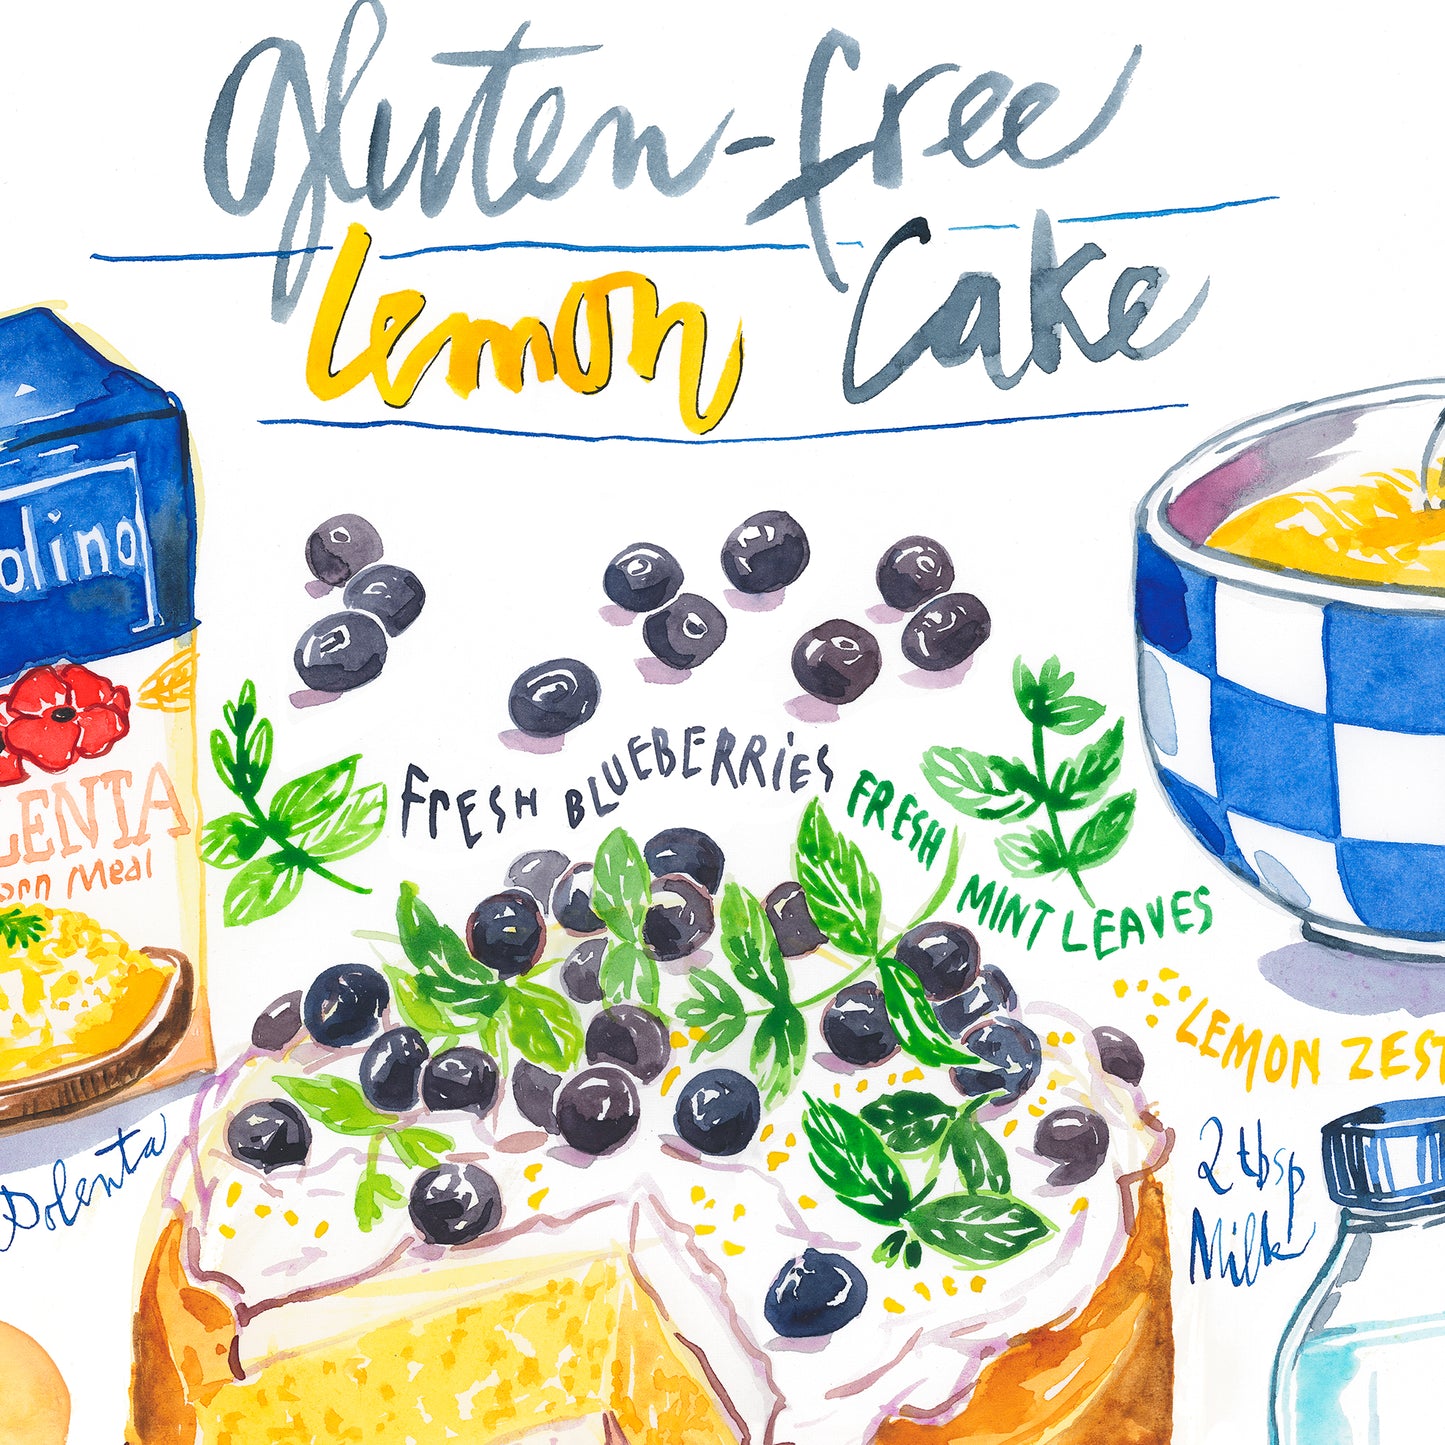 Gluten-Free Lemon Cake recipe